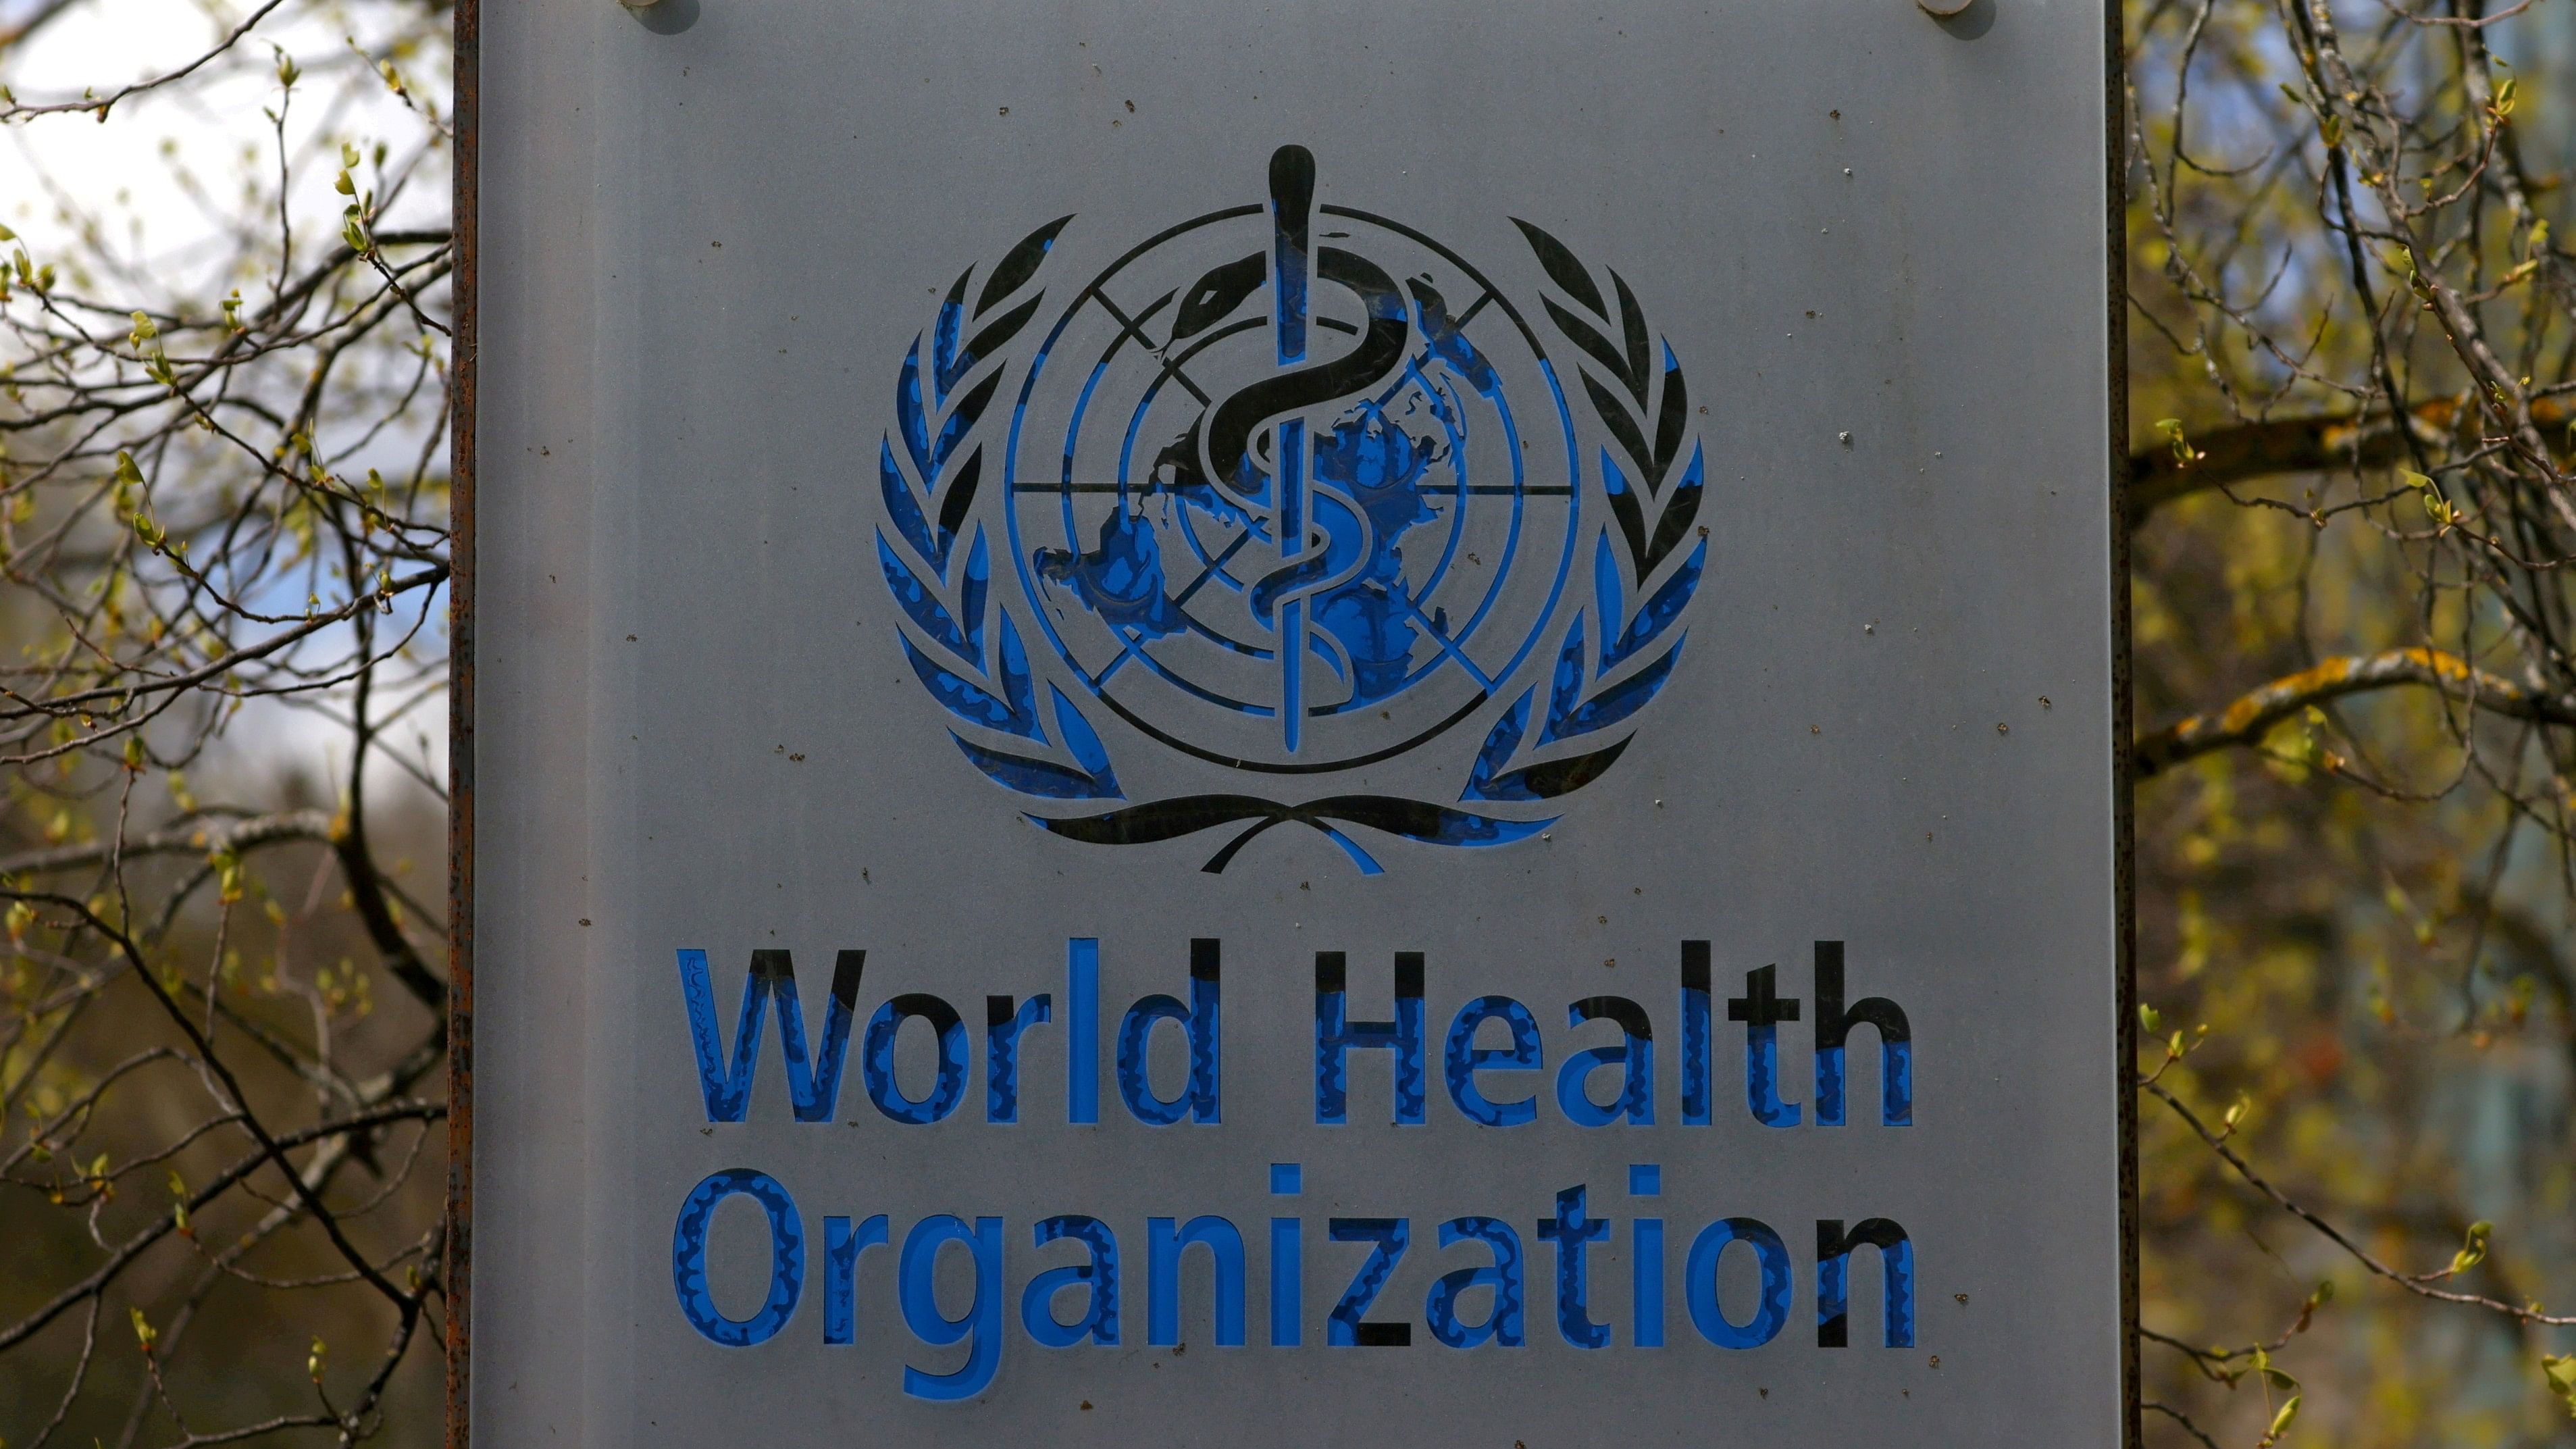 <div class="paragraphs"><p>The World Health Organization (WHO) logo.</p></div>